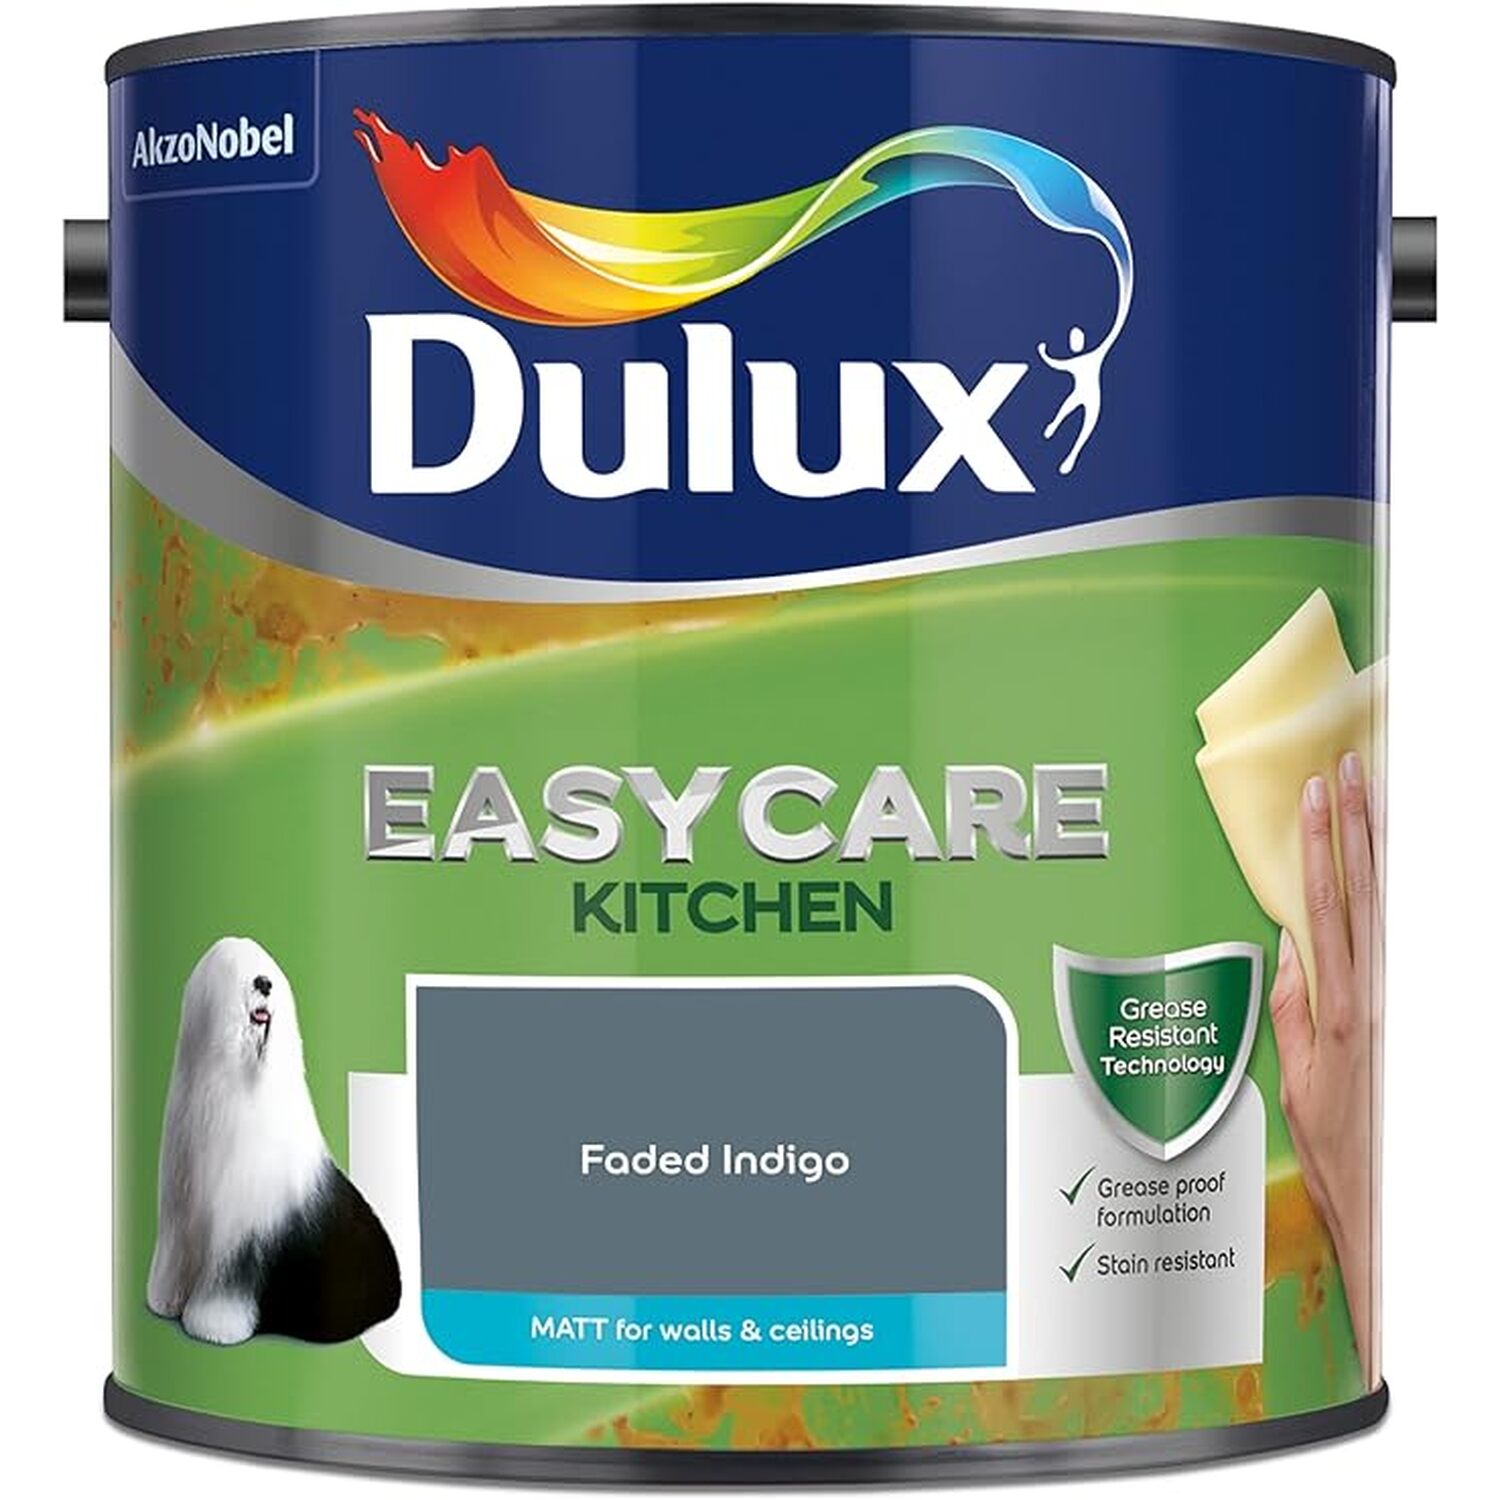 Dulux Easycare Kitchen Faded Indigo Matt Emulsion Paint 2.5L Image 2